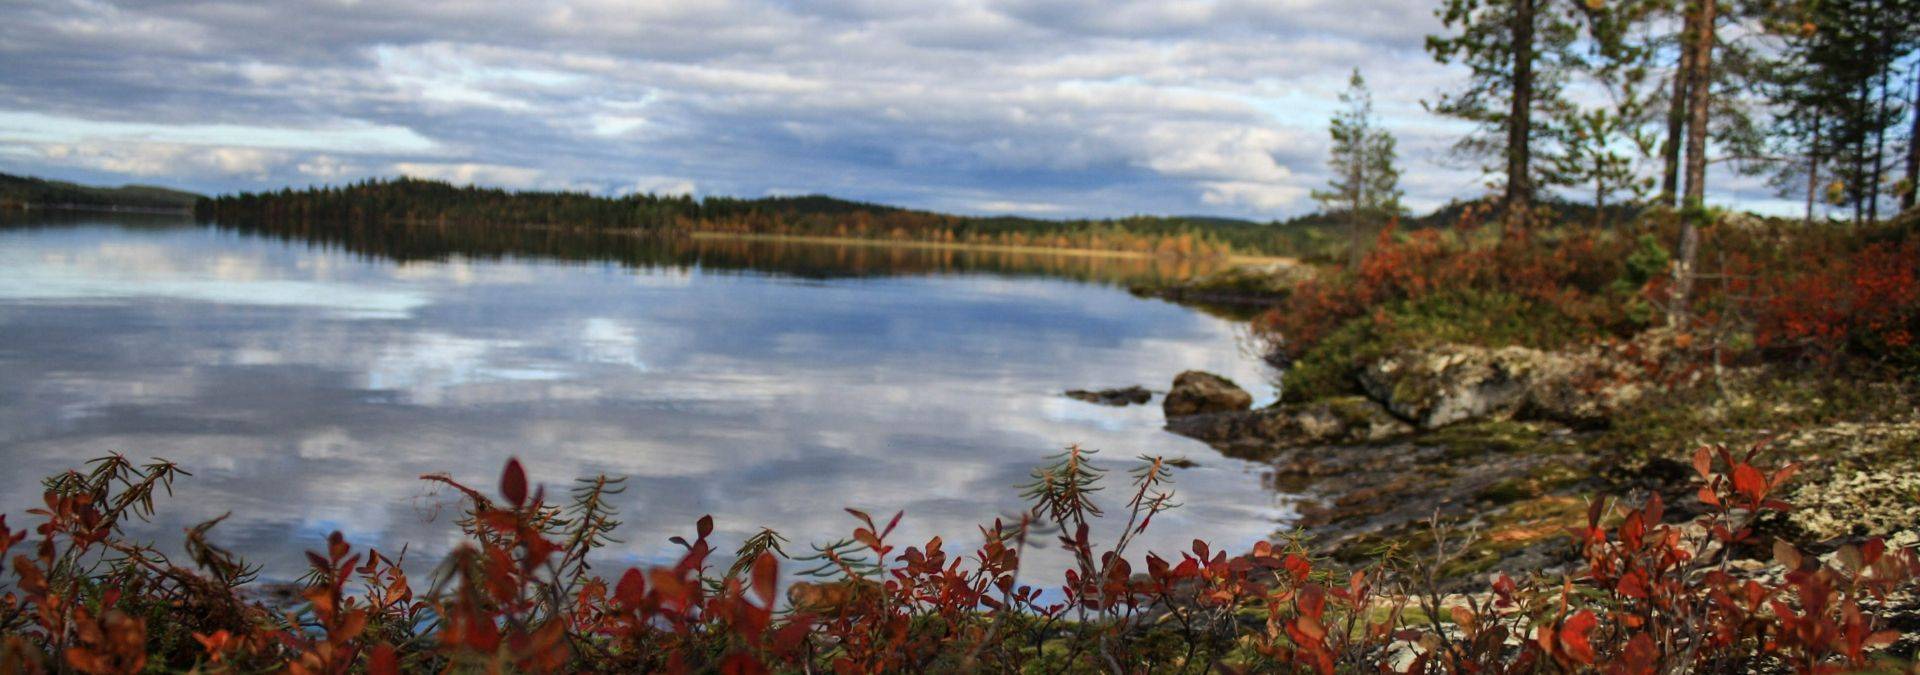 Autumn Over Lake Inari   Credit Visit Inari